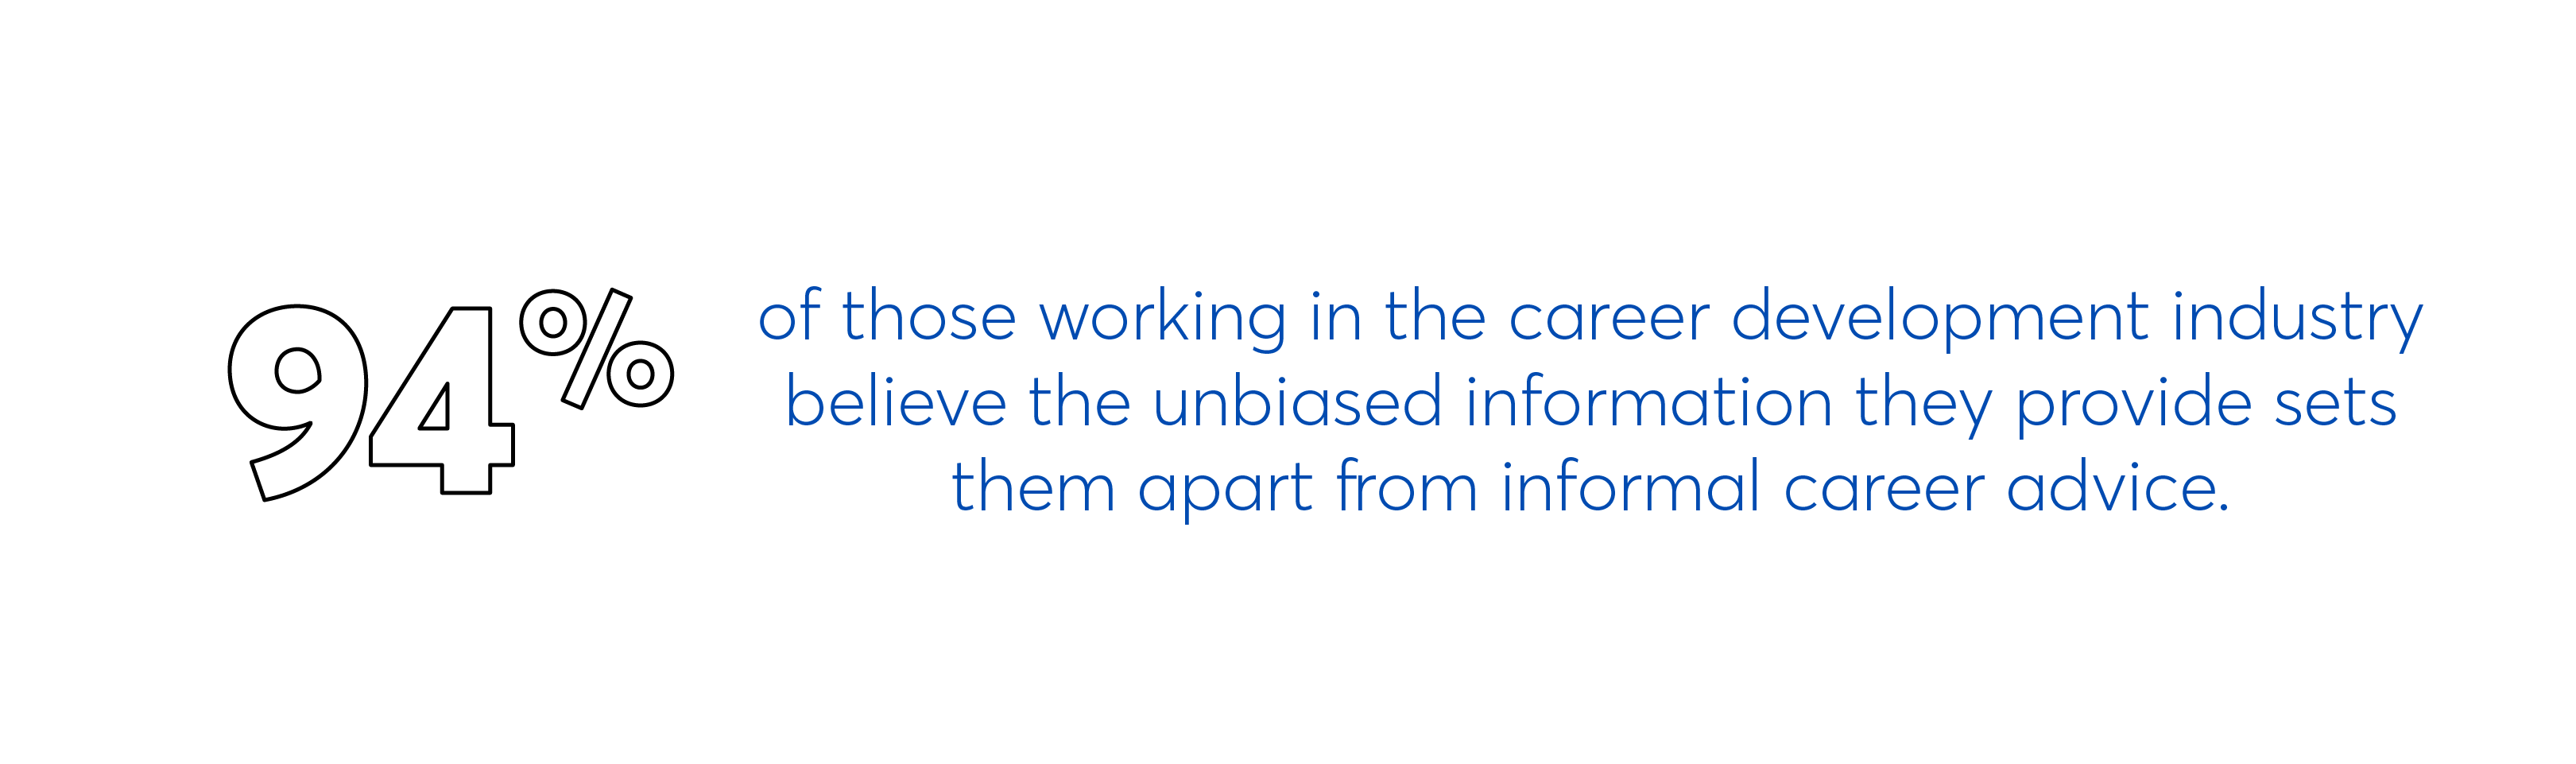 People working in career development believes that unbiased information sets them apart